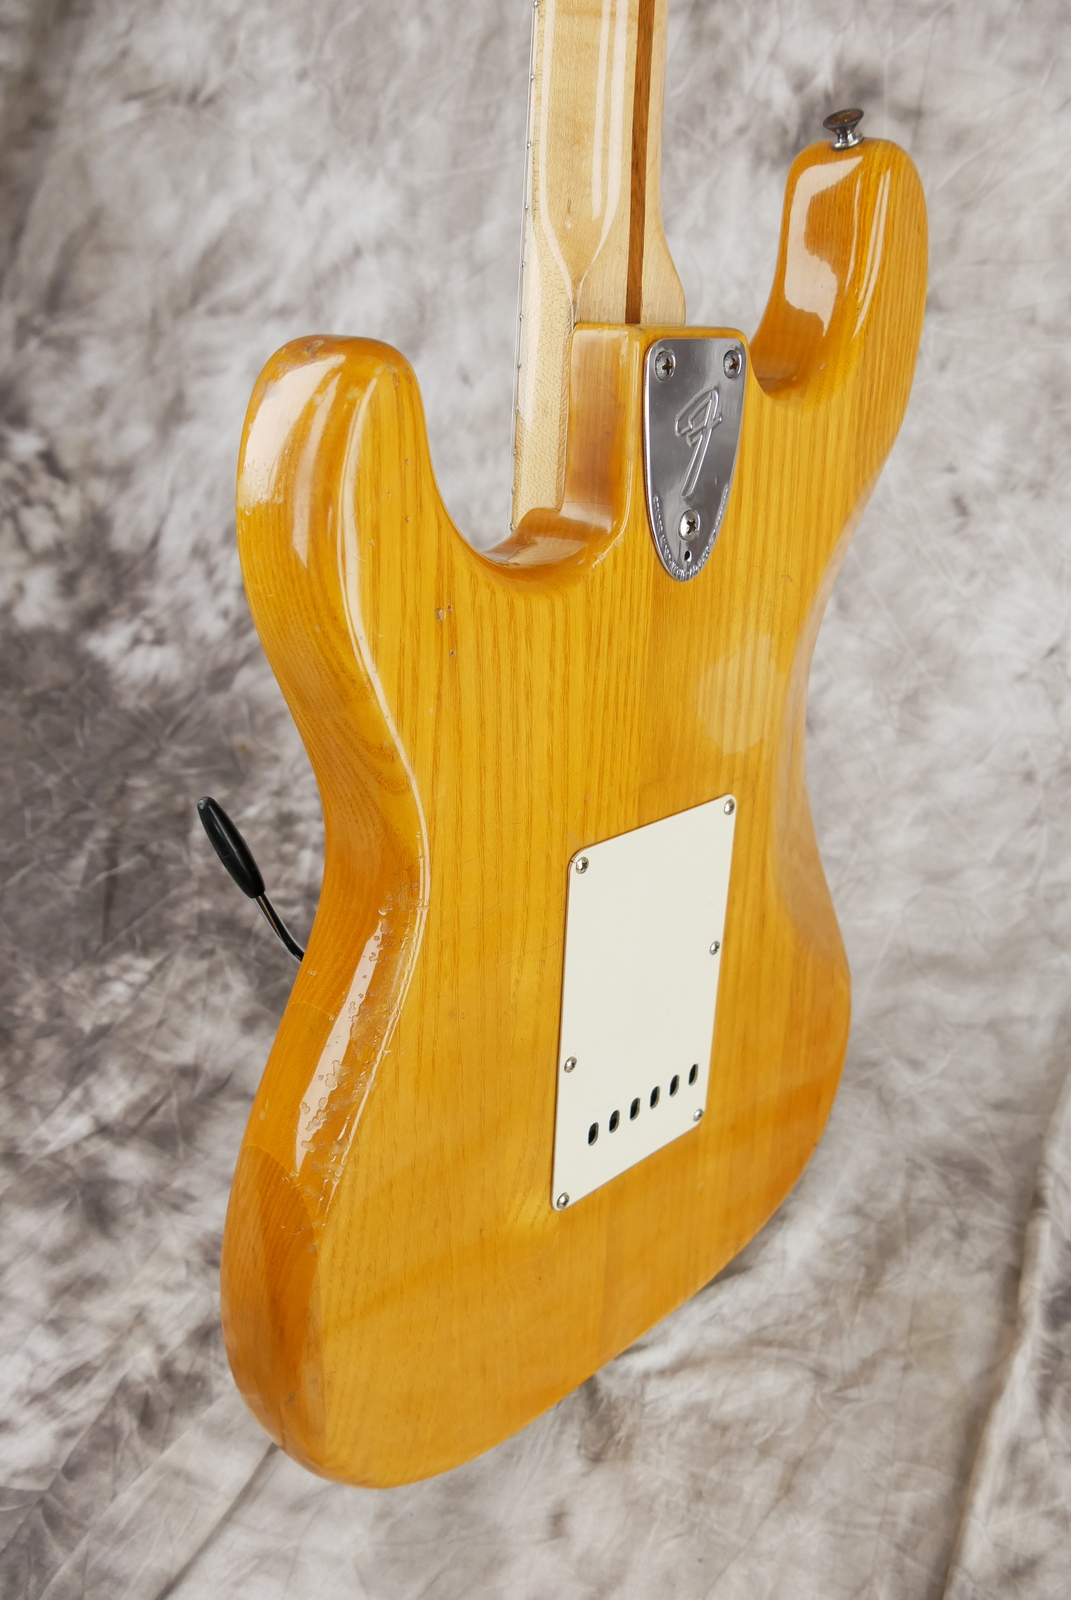 Fender_Stratocaster_10_piece_body_natural_USA_1977-007.JPG